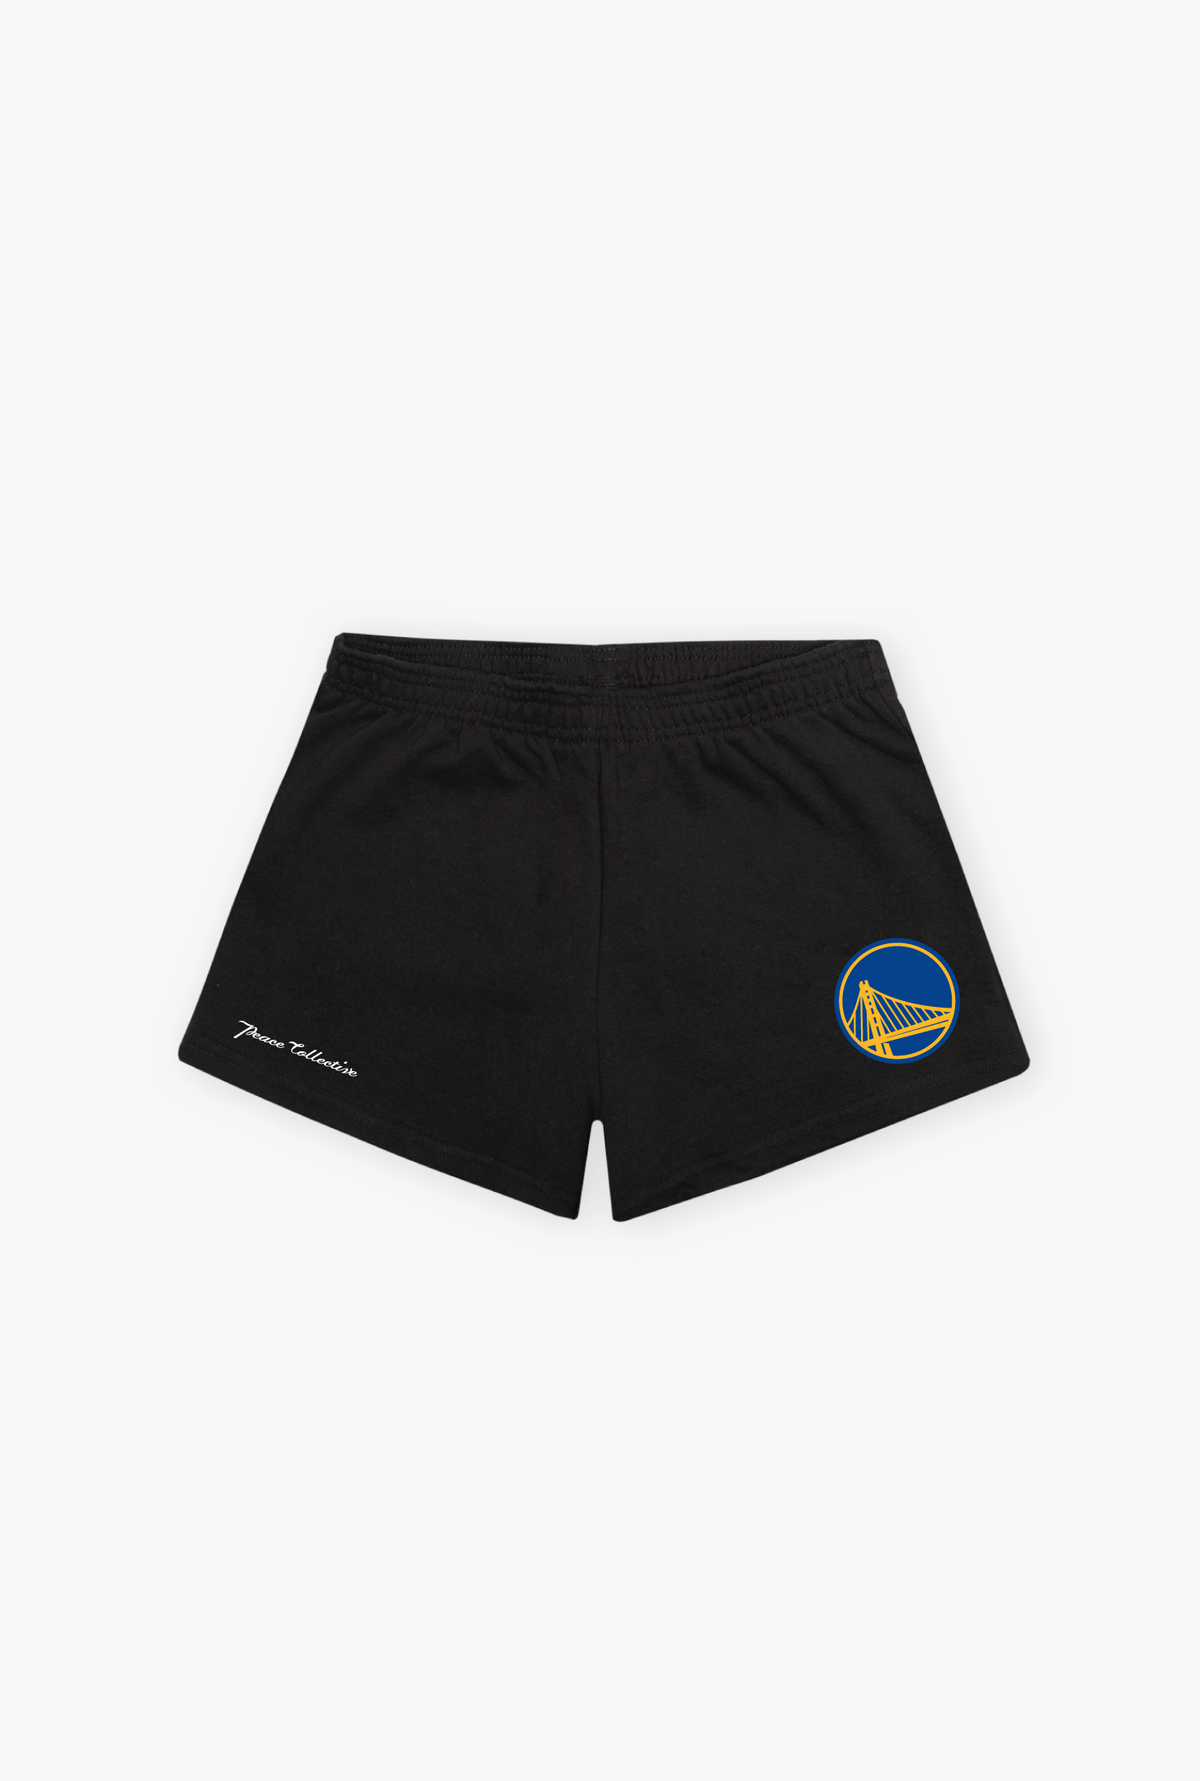 Golden State Warriors Women's Fleece Shorts - Black